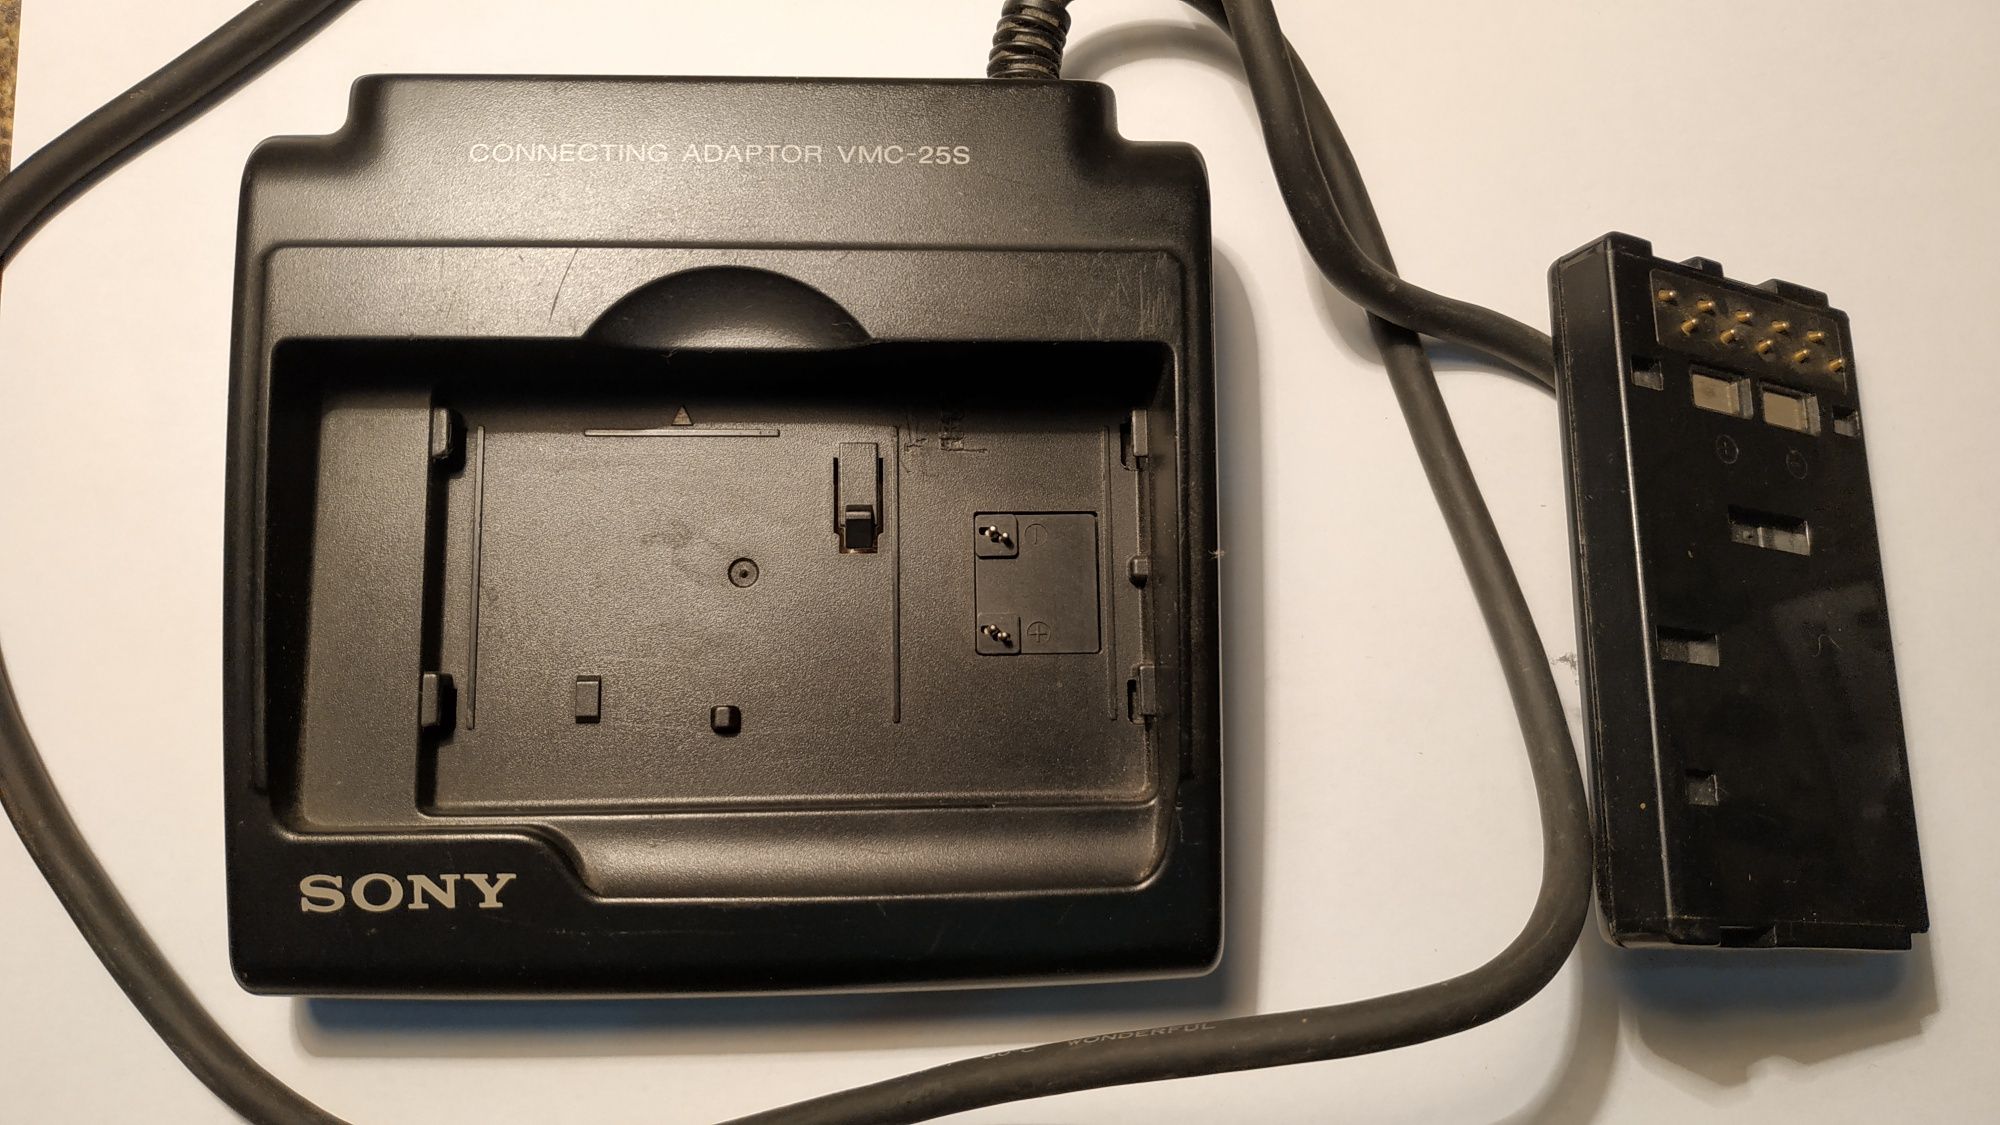 Sony Connecting Adaptor VMC-25S